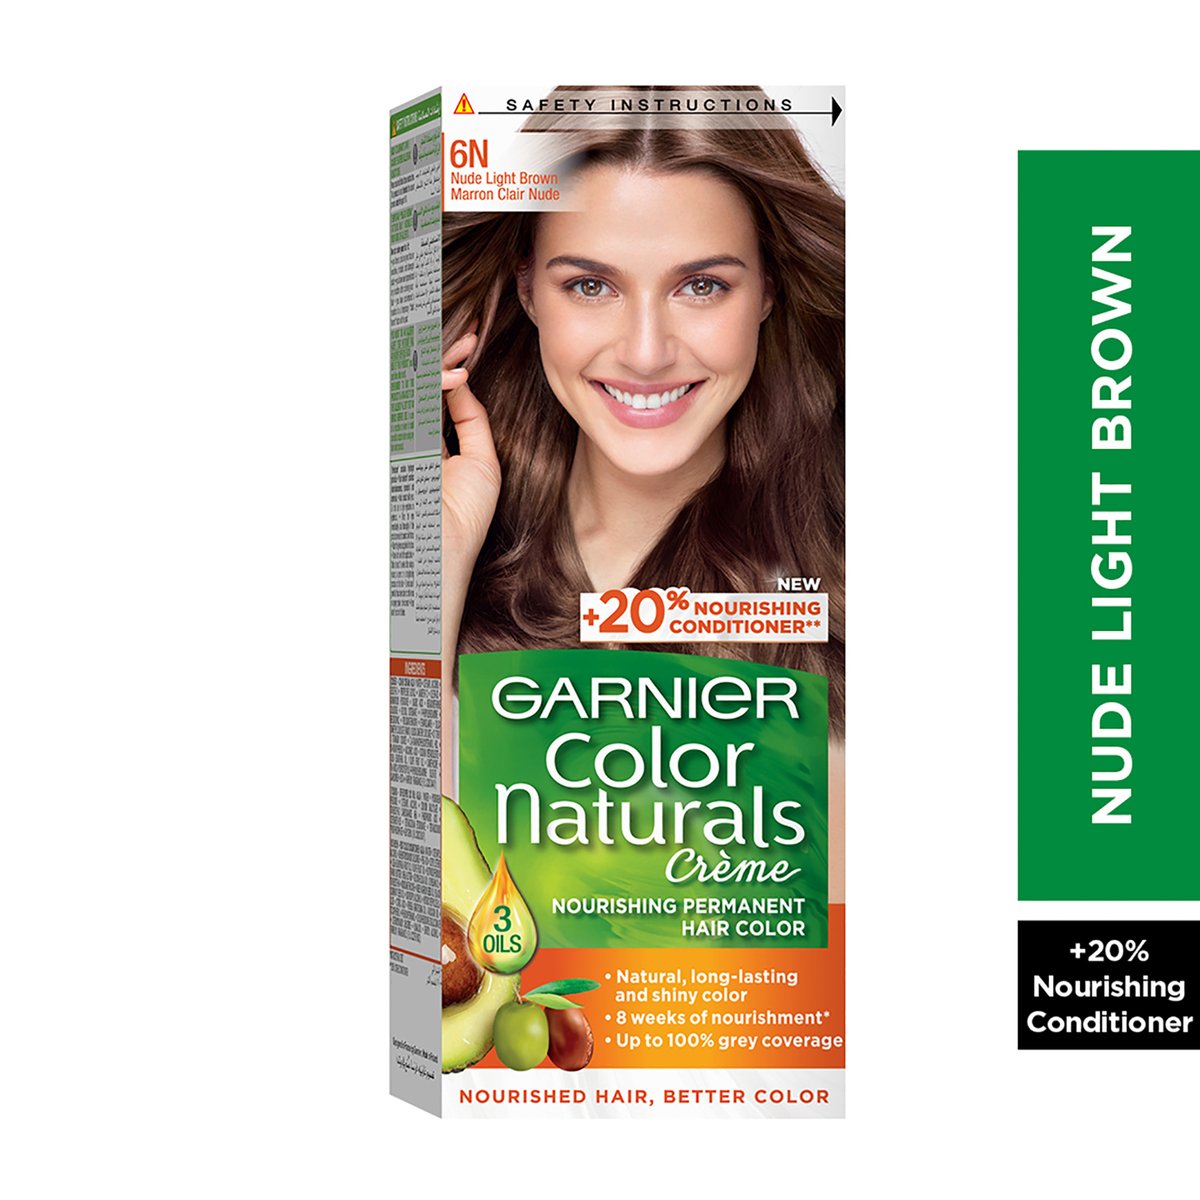 Garnier Color Naturals Creme Nourishing Permanent Hair Color 6N Nude Light Brown 1 pkt